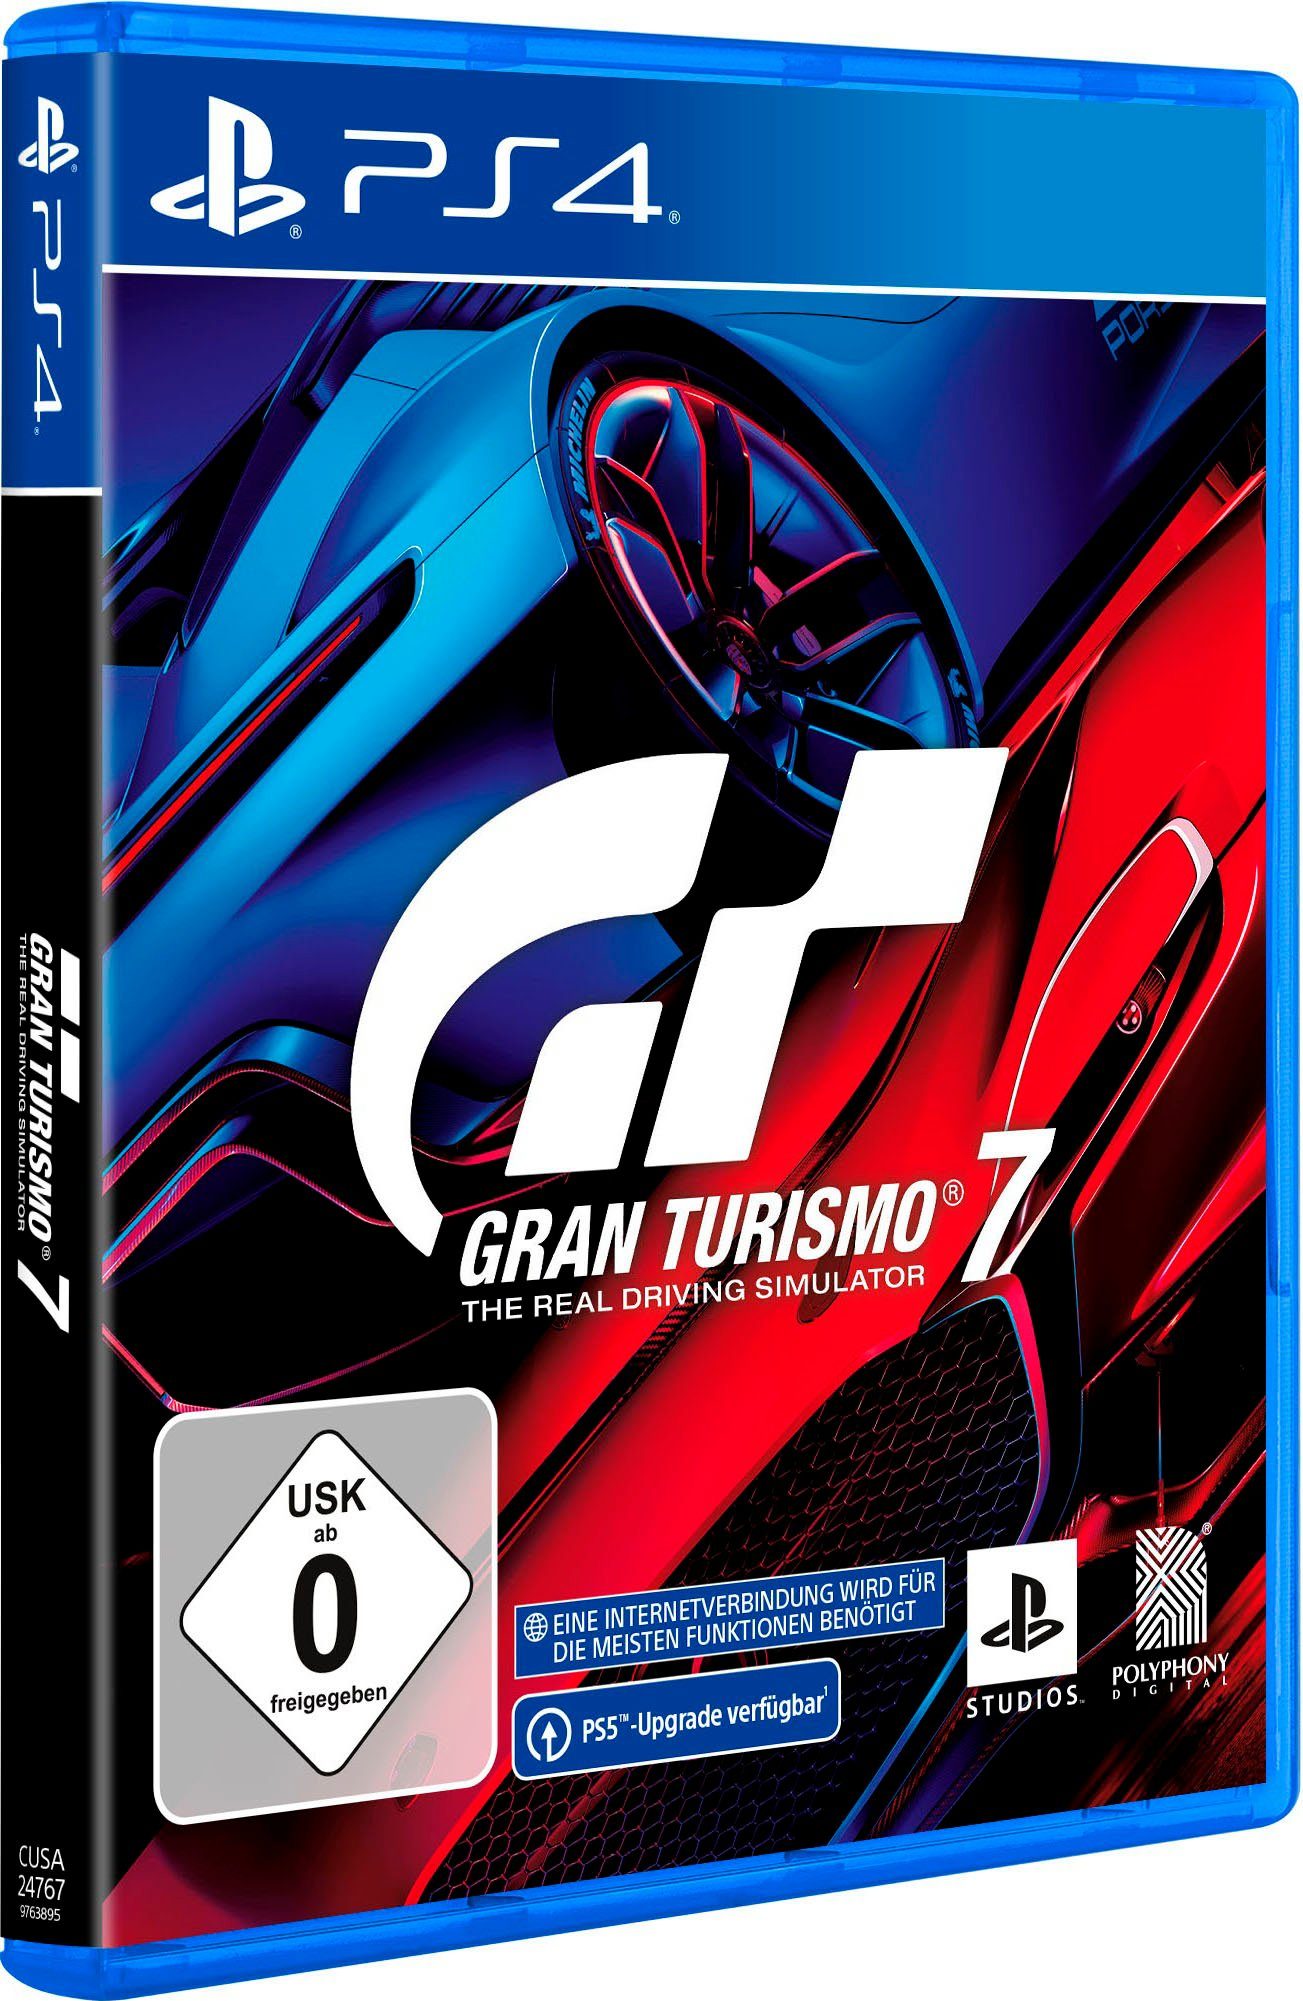 Sony PlayStation Gran 4 7 Turismo